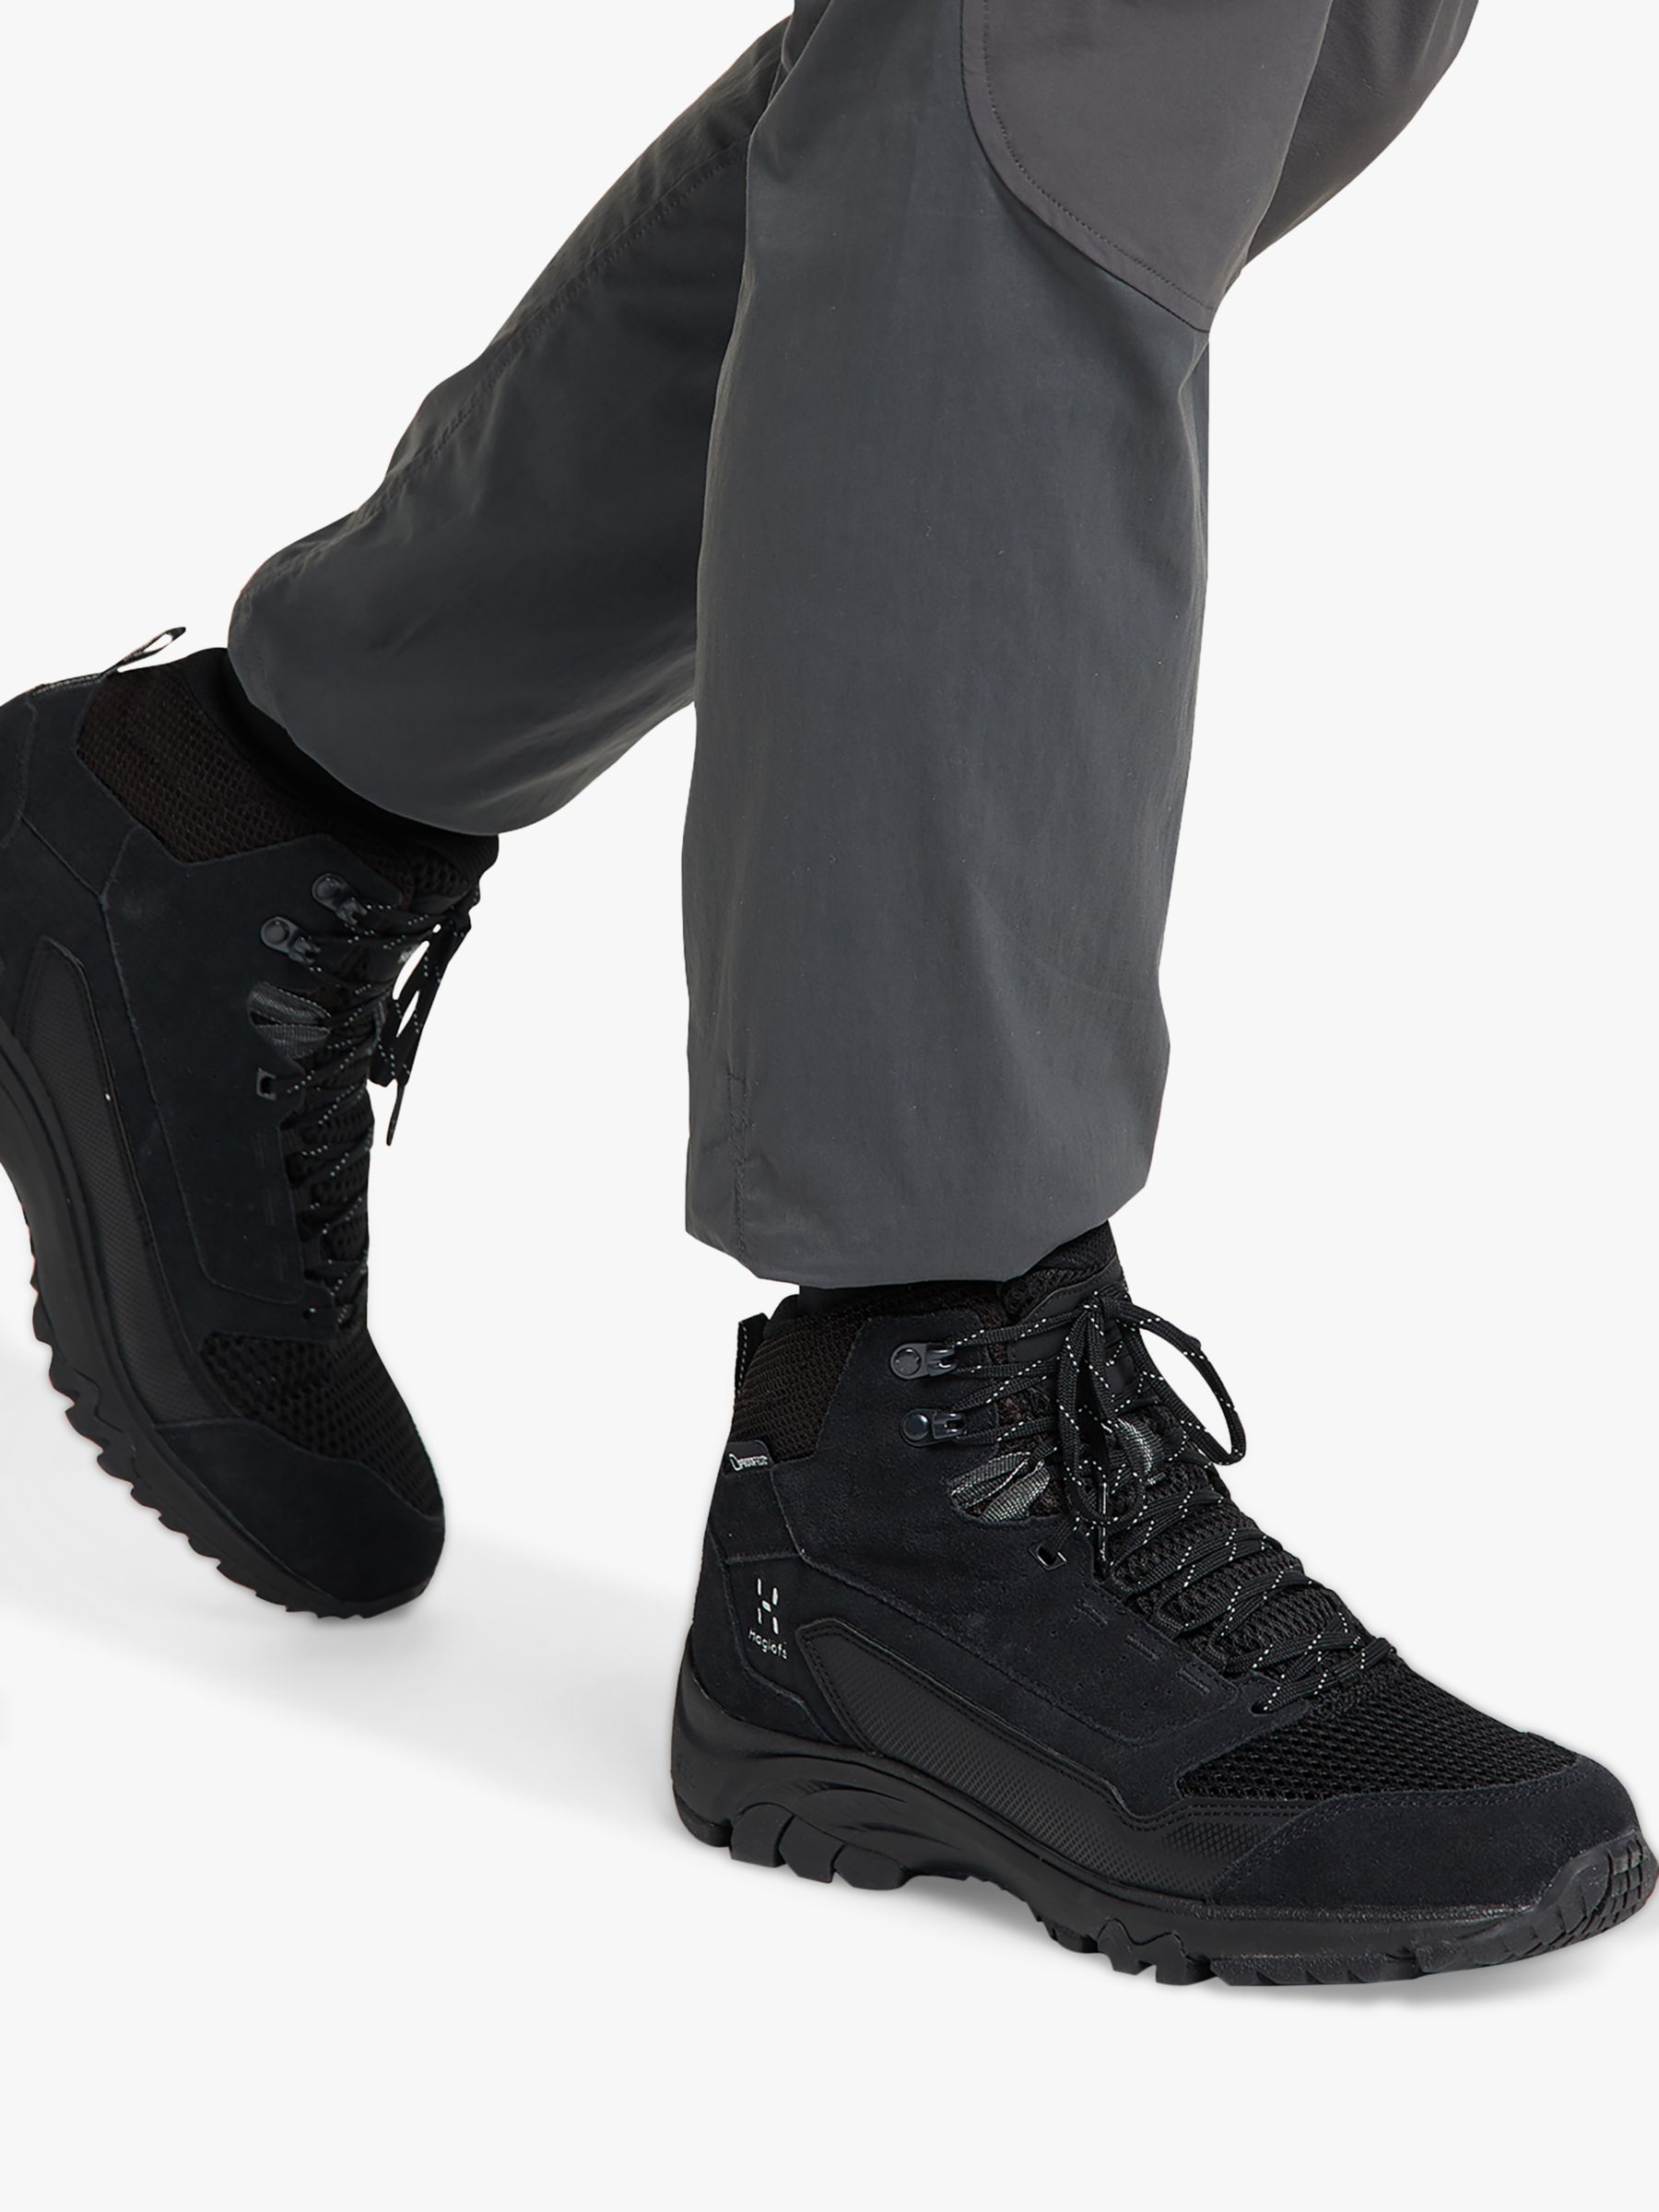 Haglöfs Skuta Mid Proof Men Walking Boots, Black, 9